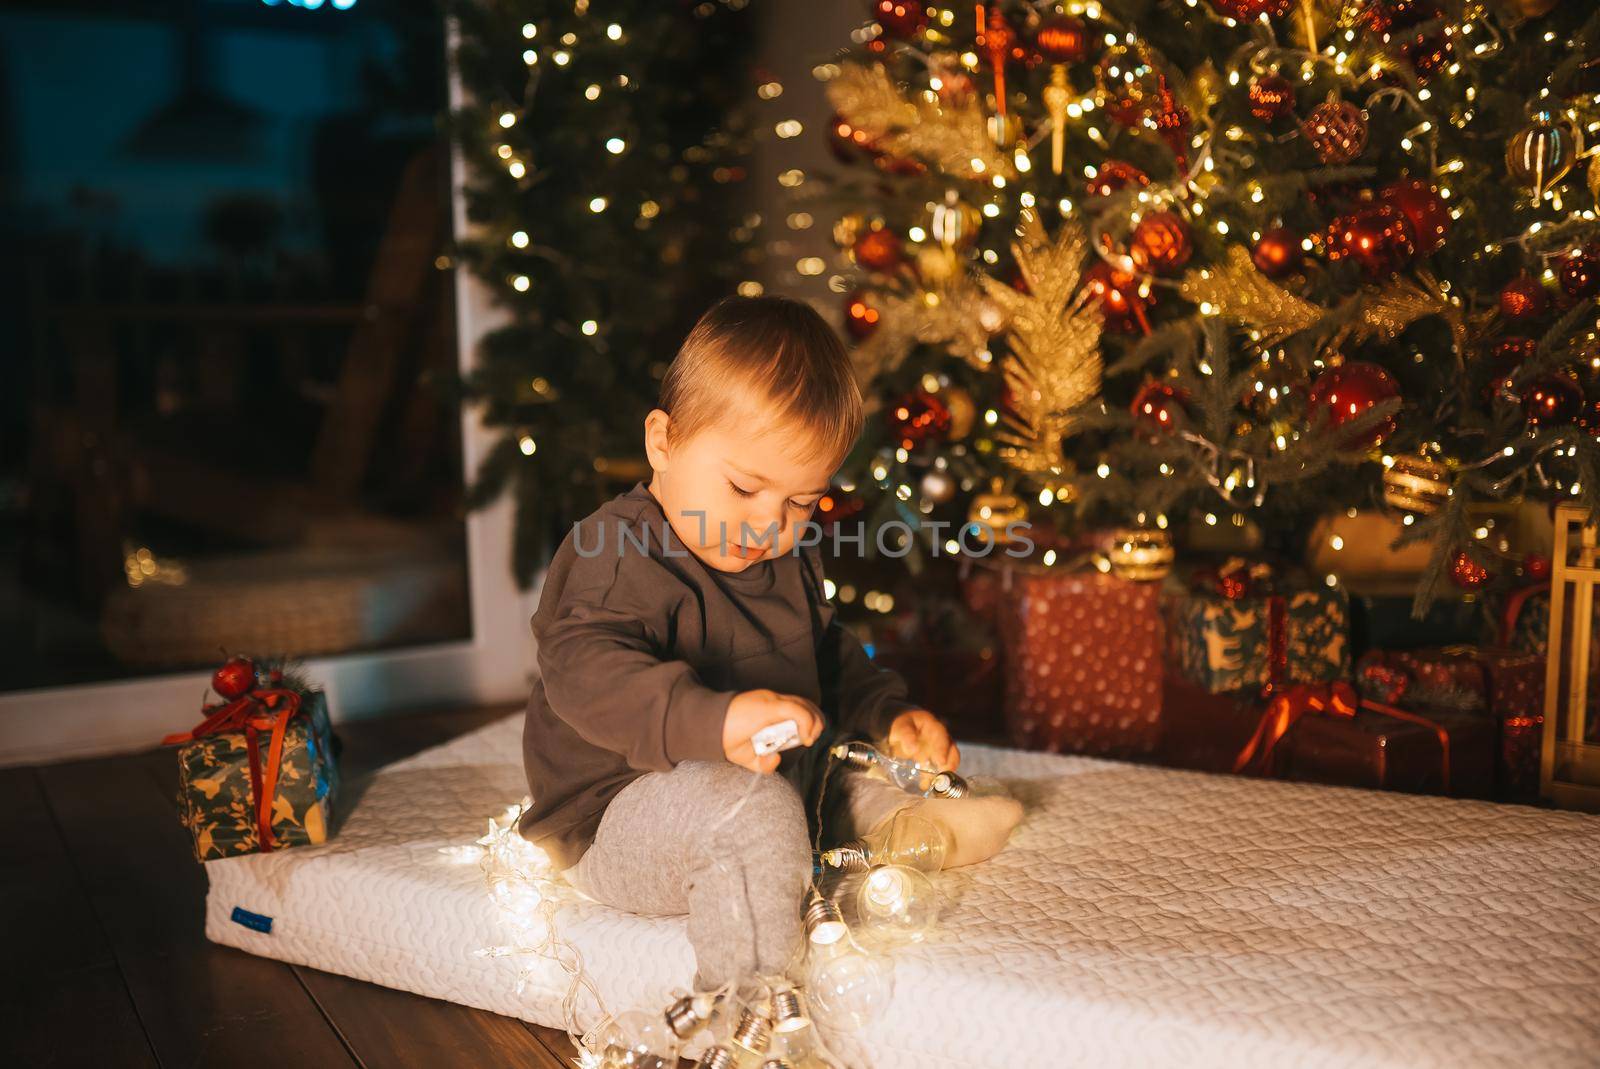 Child celebrating holidays near Christmas tree. New year and gifts. Magic.